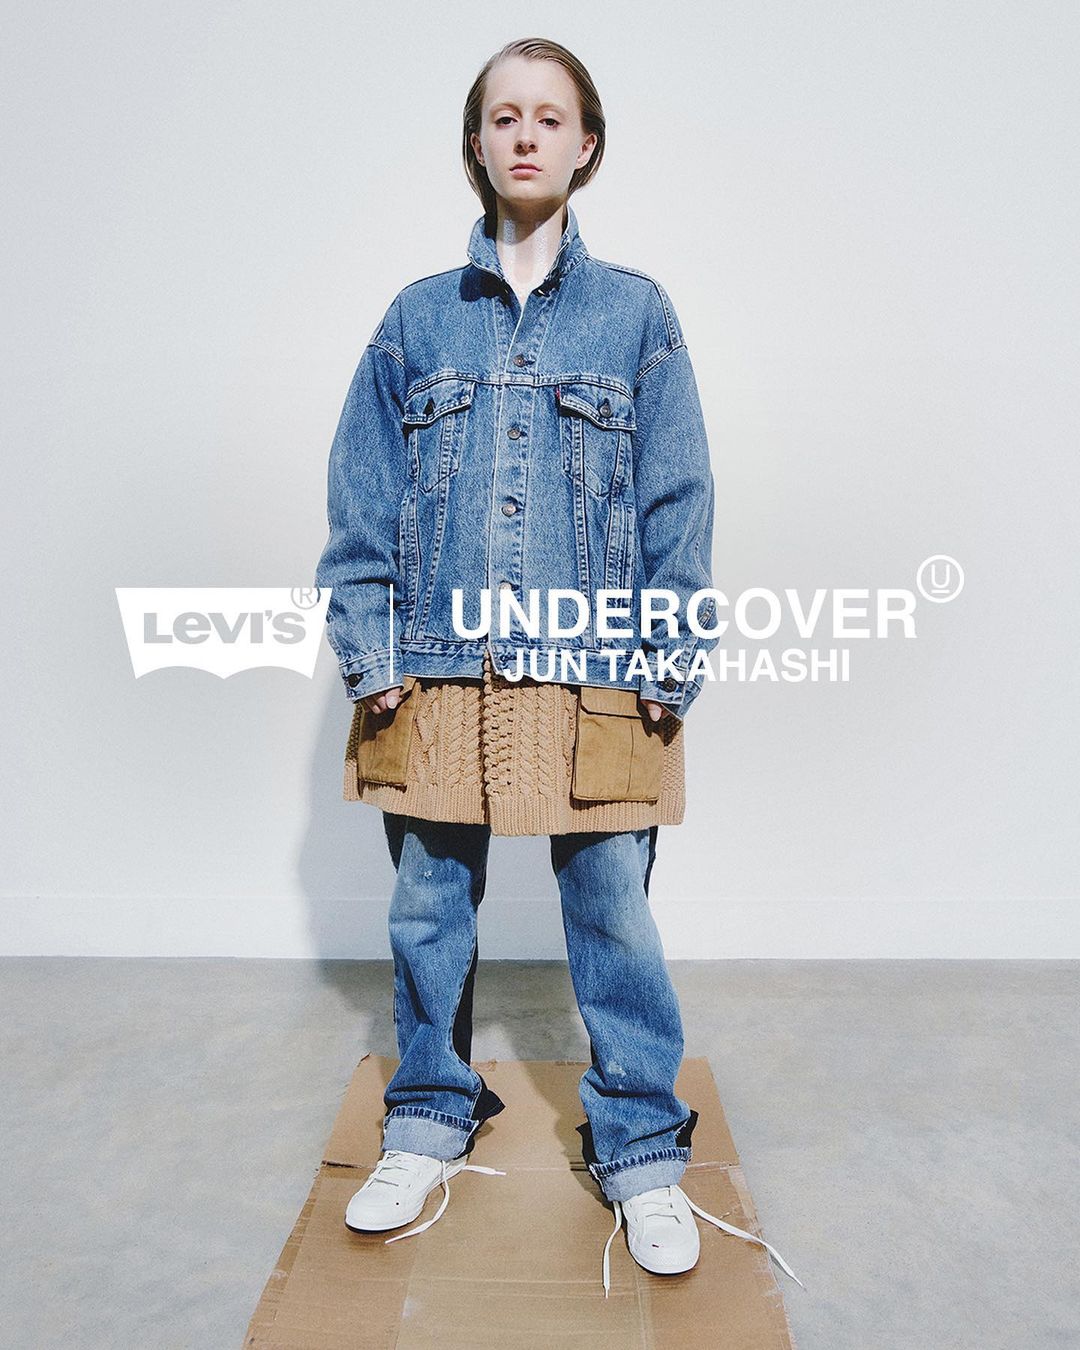 Levi’s x UNDERCOVER コラボレーションが11/11 発売 (リーバイス アンダーカバー)